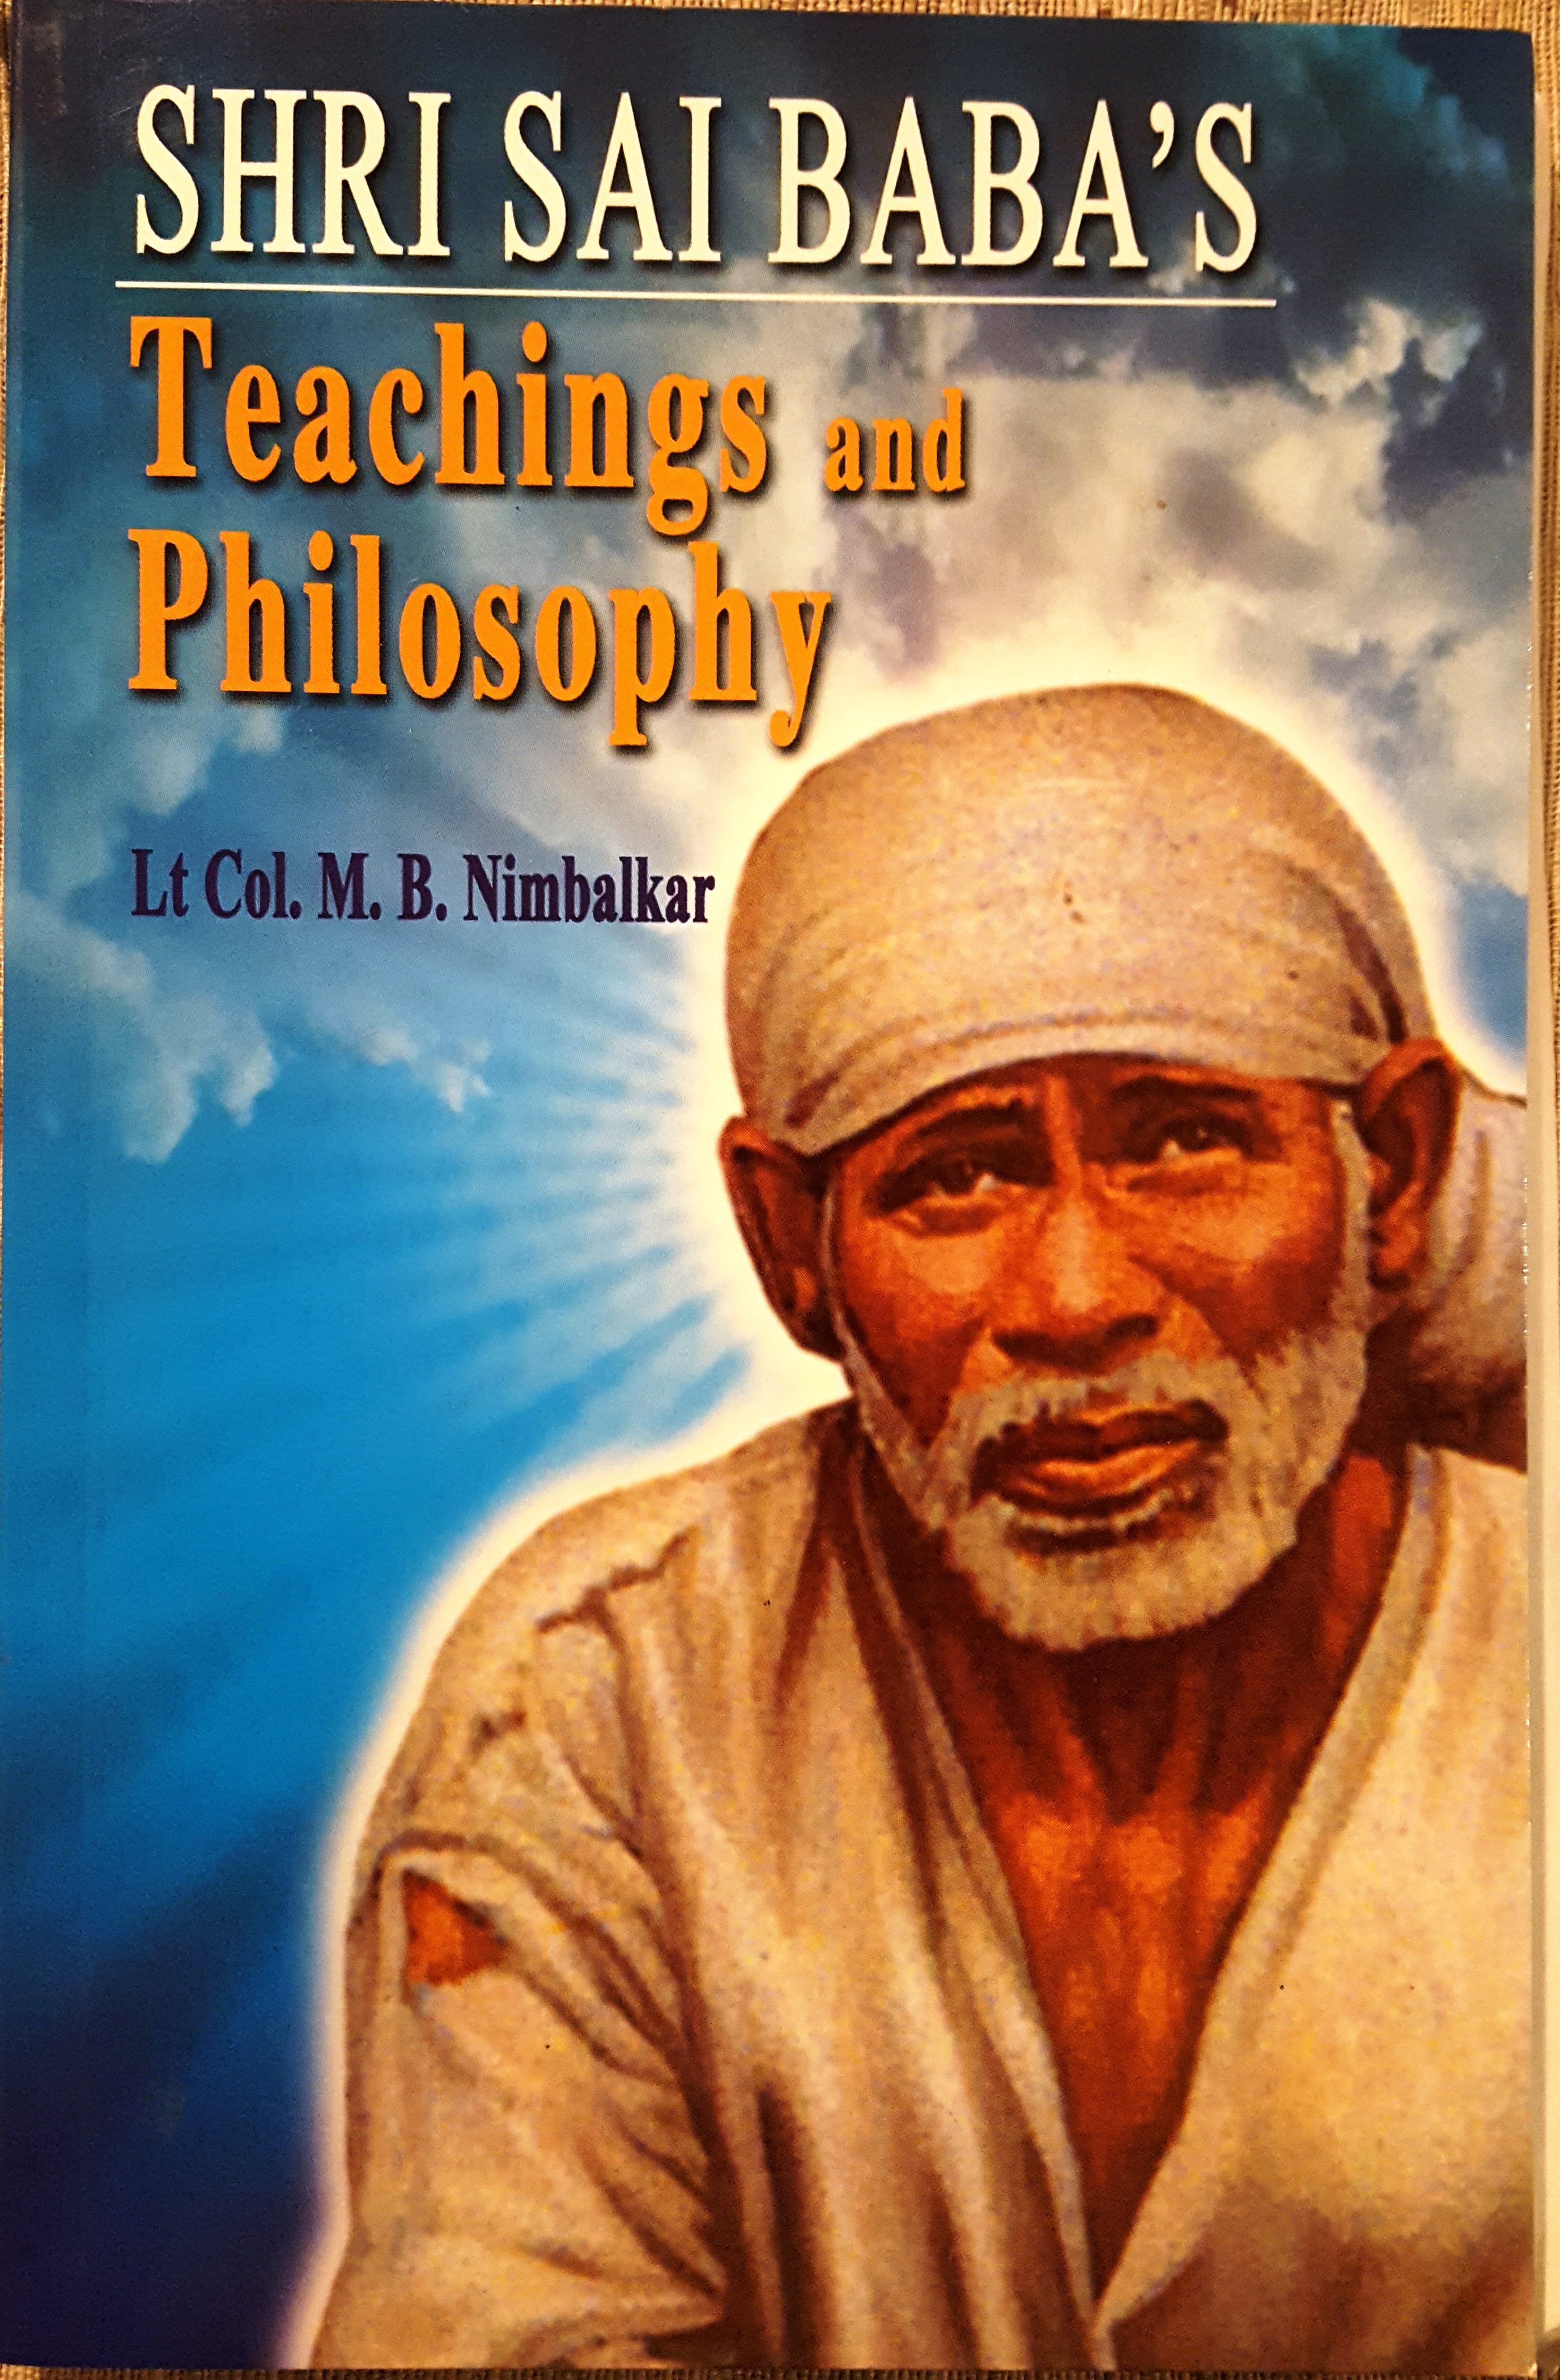 Shirdi Sai Baba Temple Frankfurt Germany (Deutschland) recommended book - Shri Sai Babas - Teachings and Philosophy .